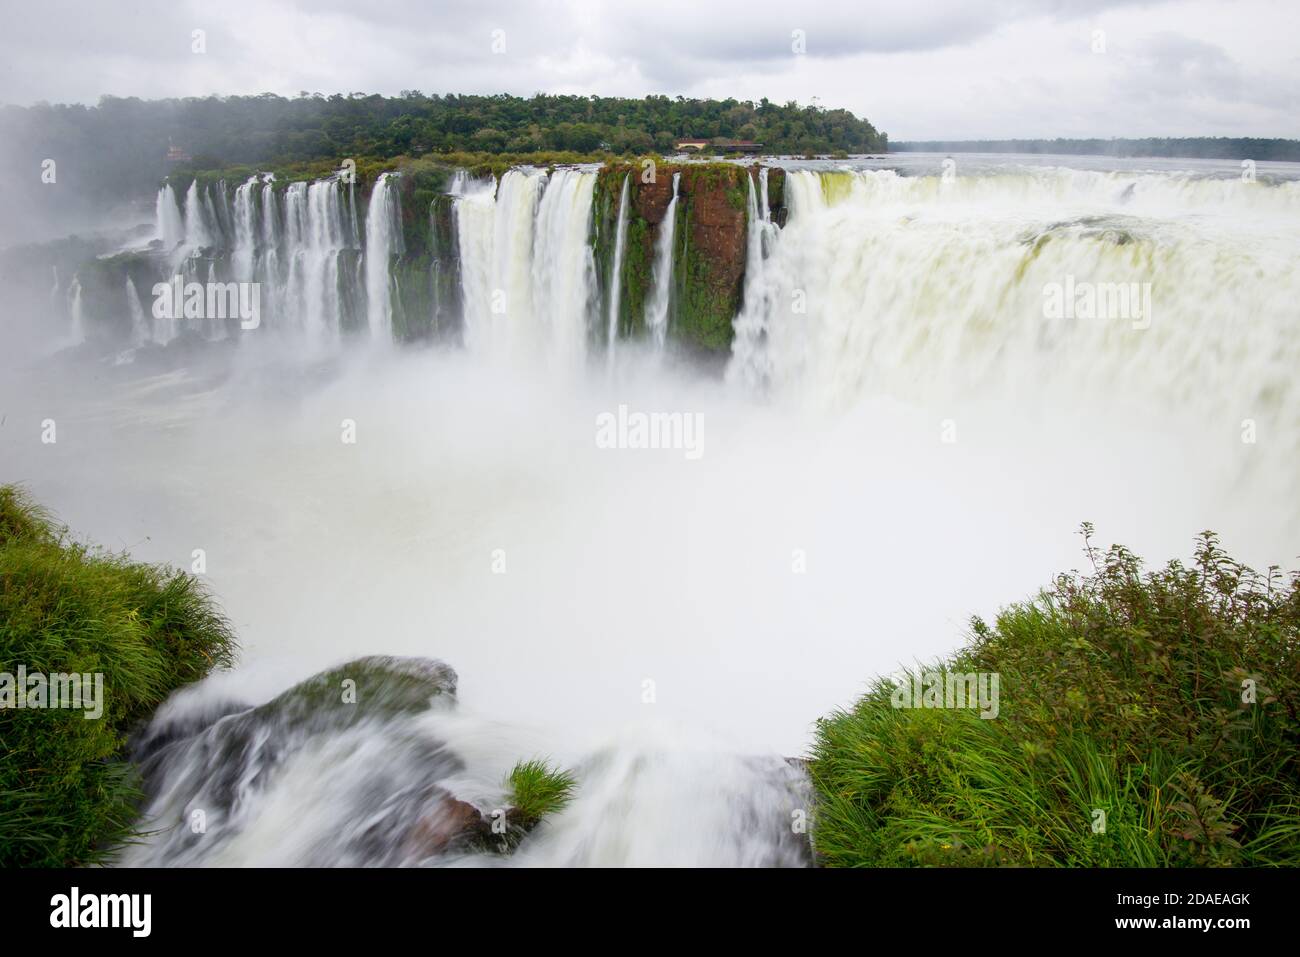 Garganta del Diablo - Iguazu Waterfalls, Argentina. South America Stock Photo